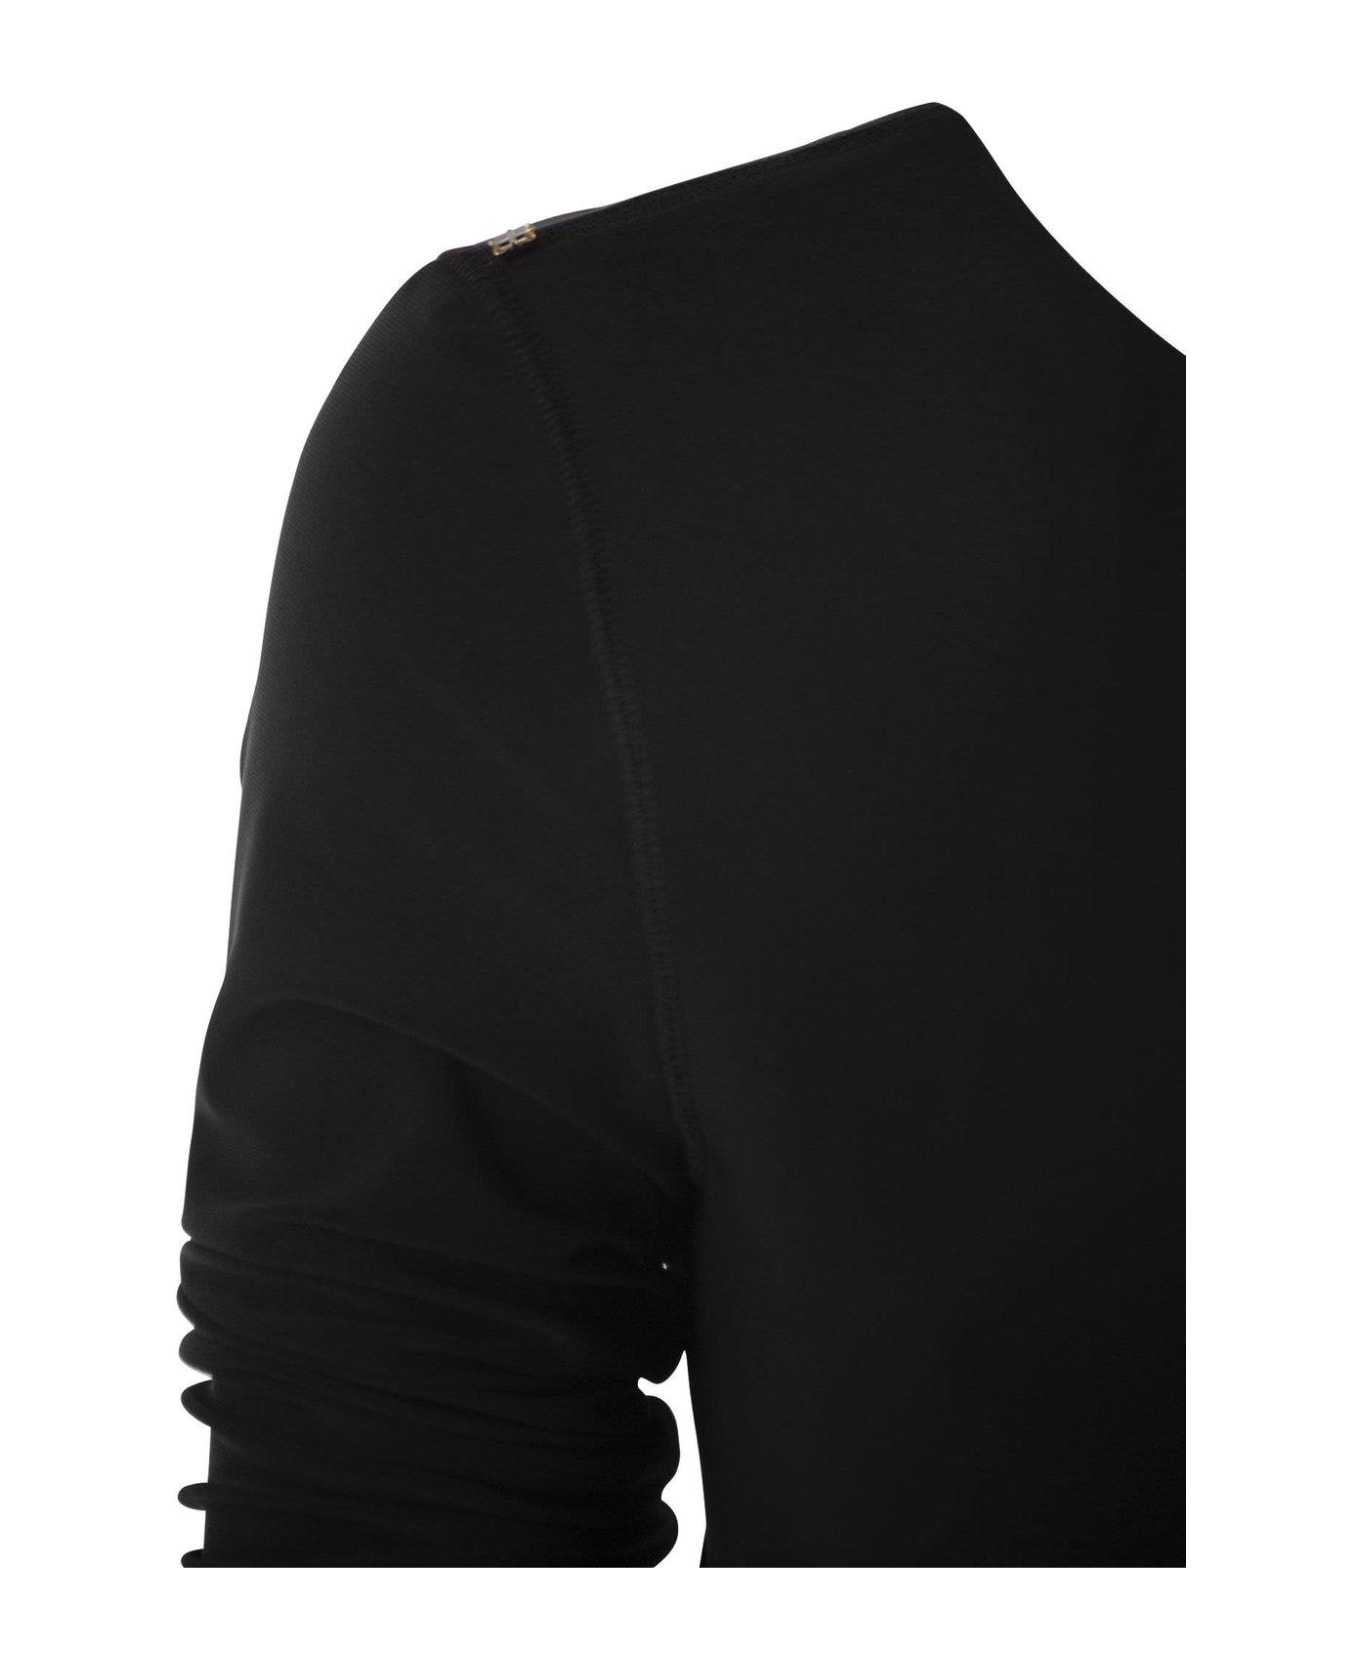 SportMax Asymmetrical One-shoulder Dress - BLACK